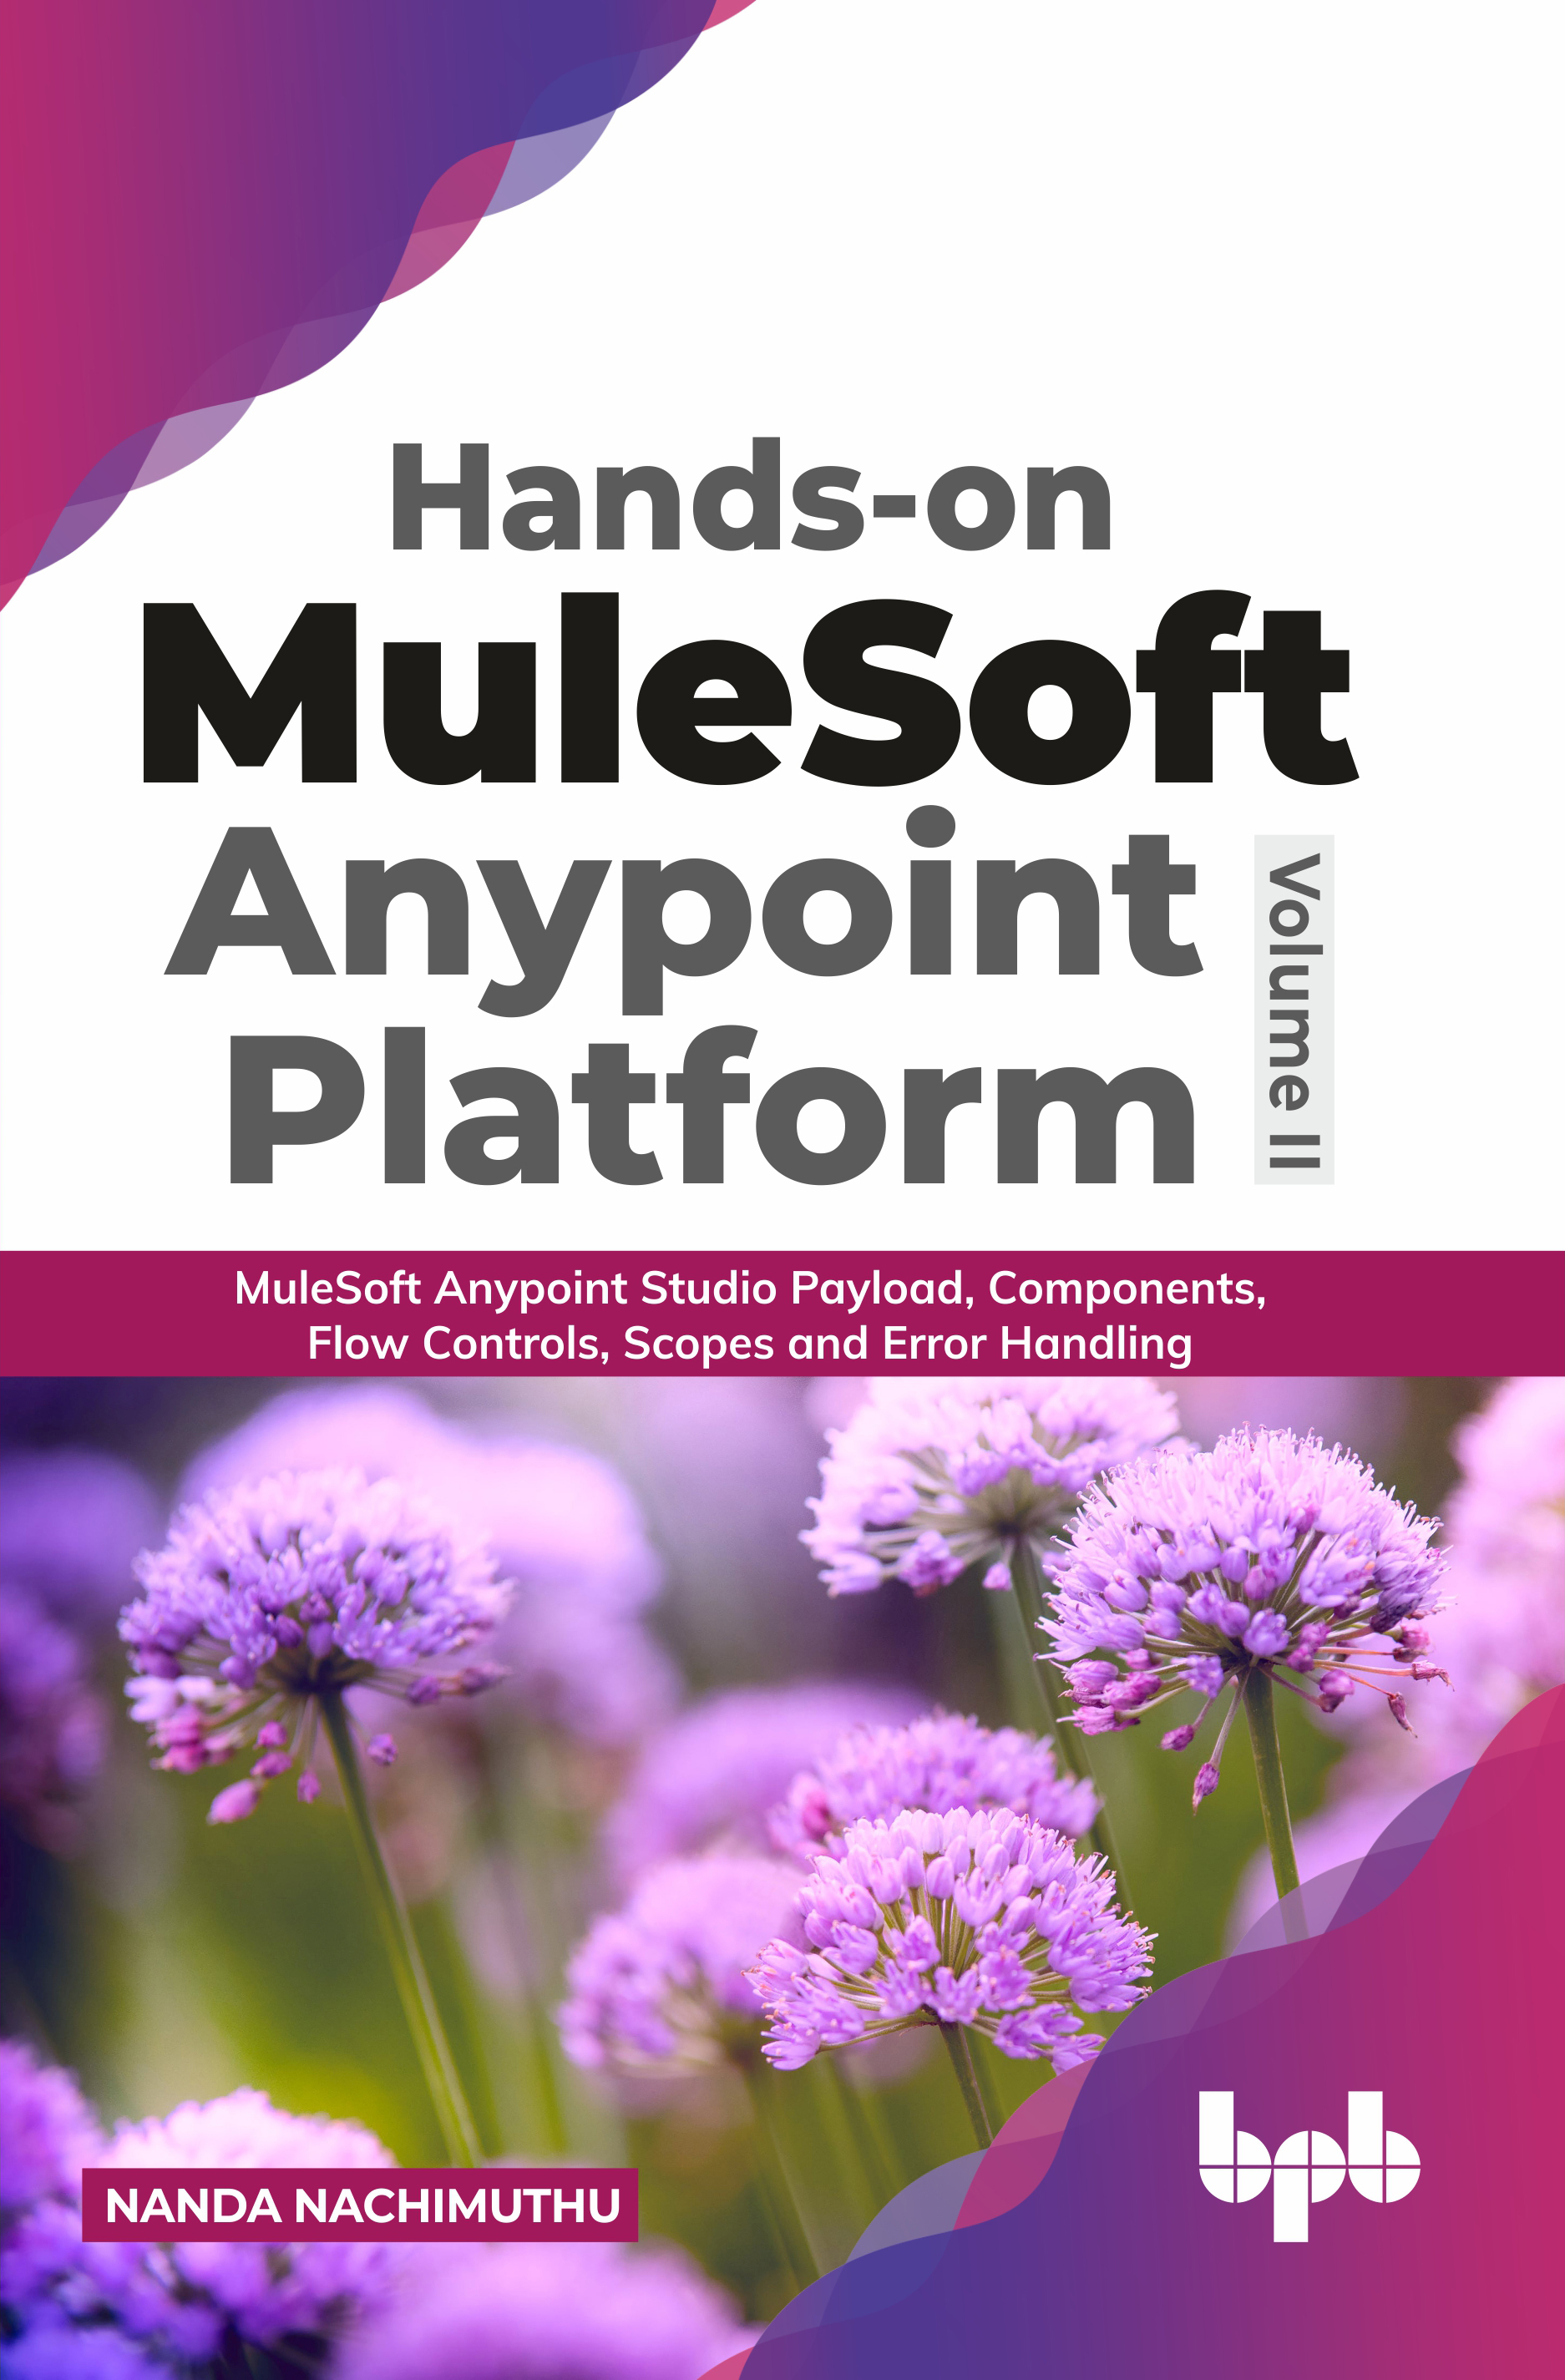 Hands-on MuleSoft Anypoint platform Volume 2